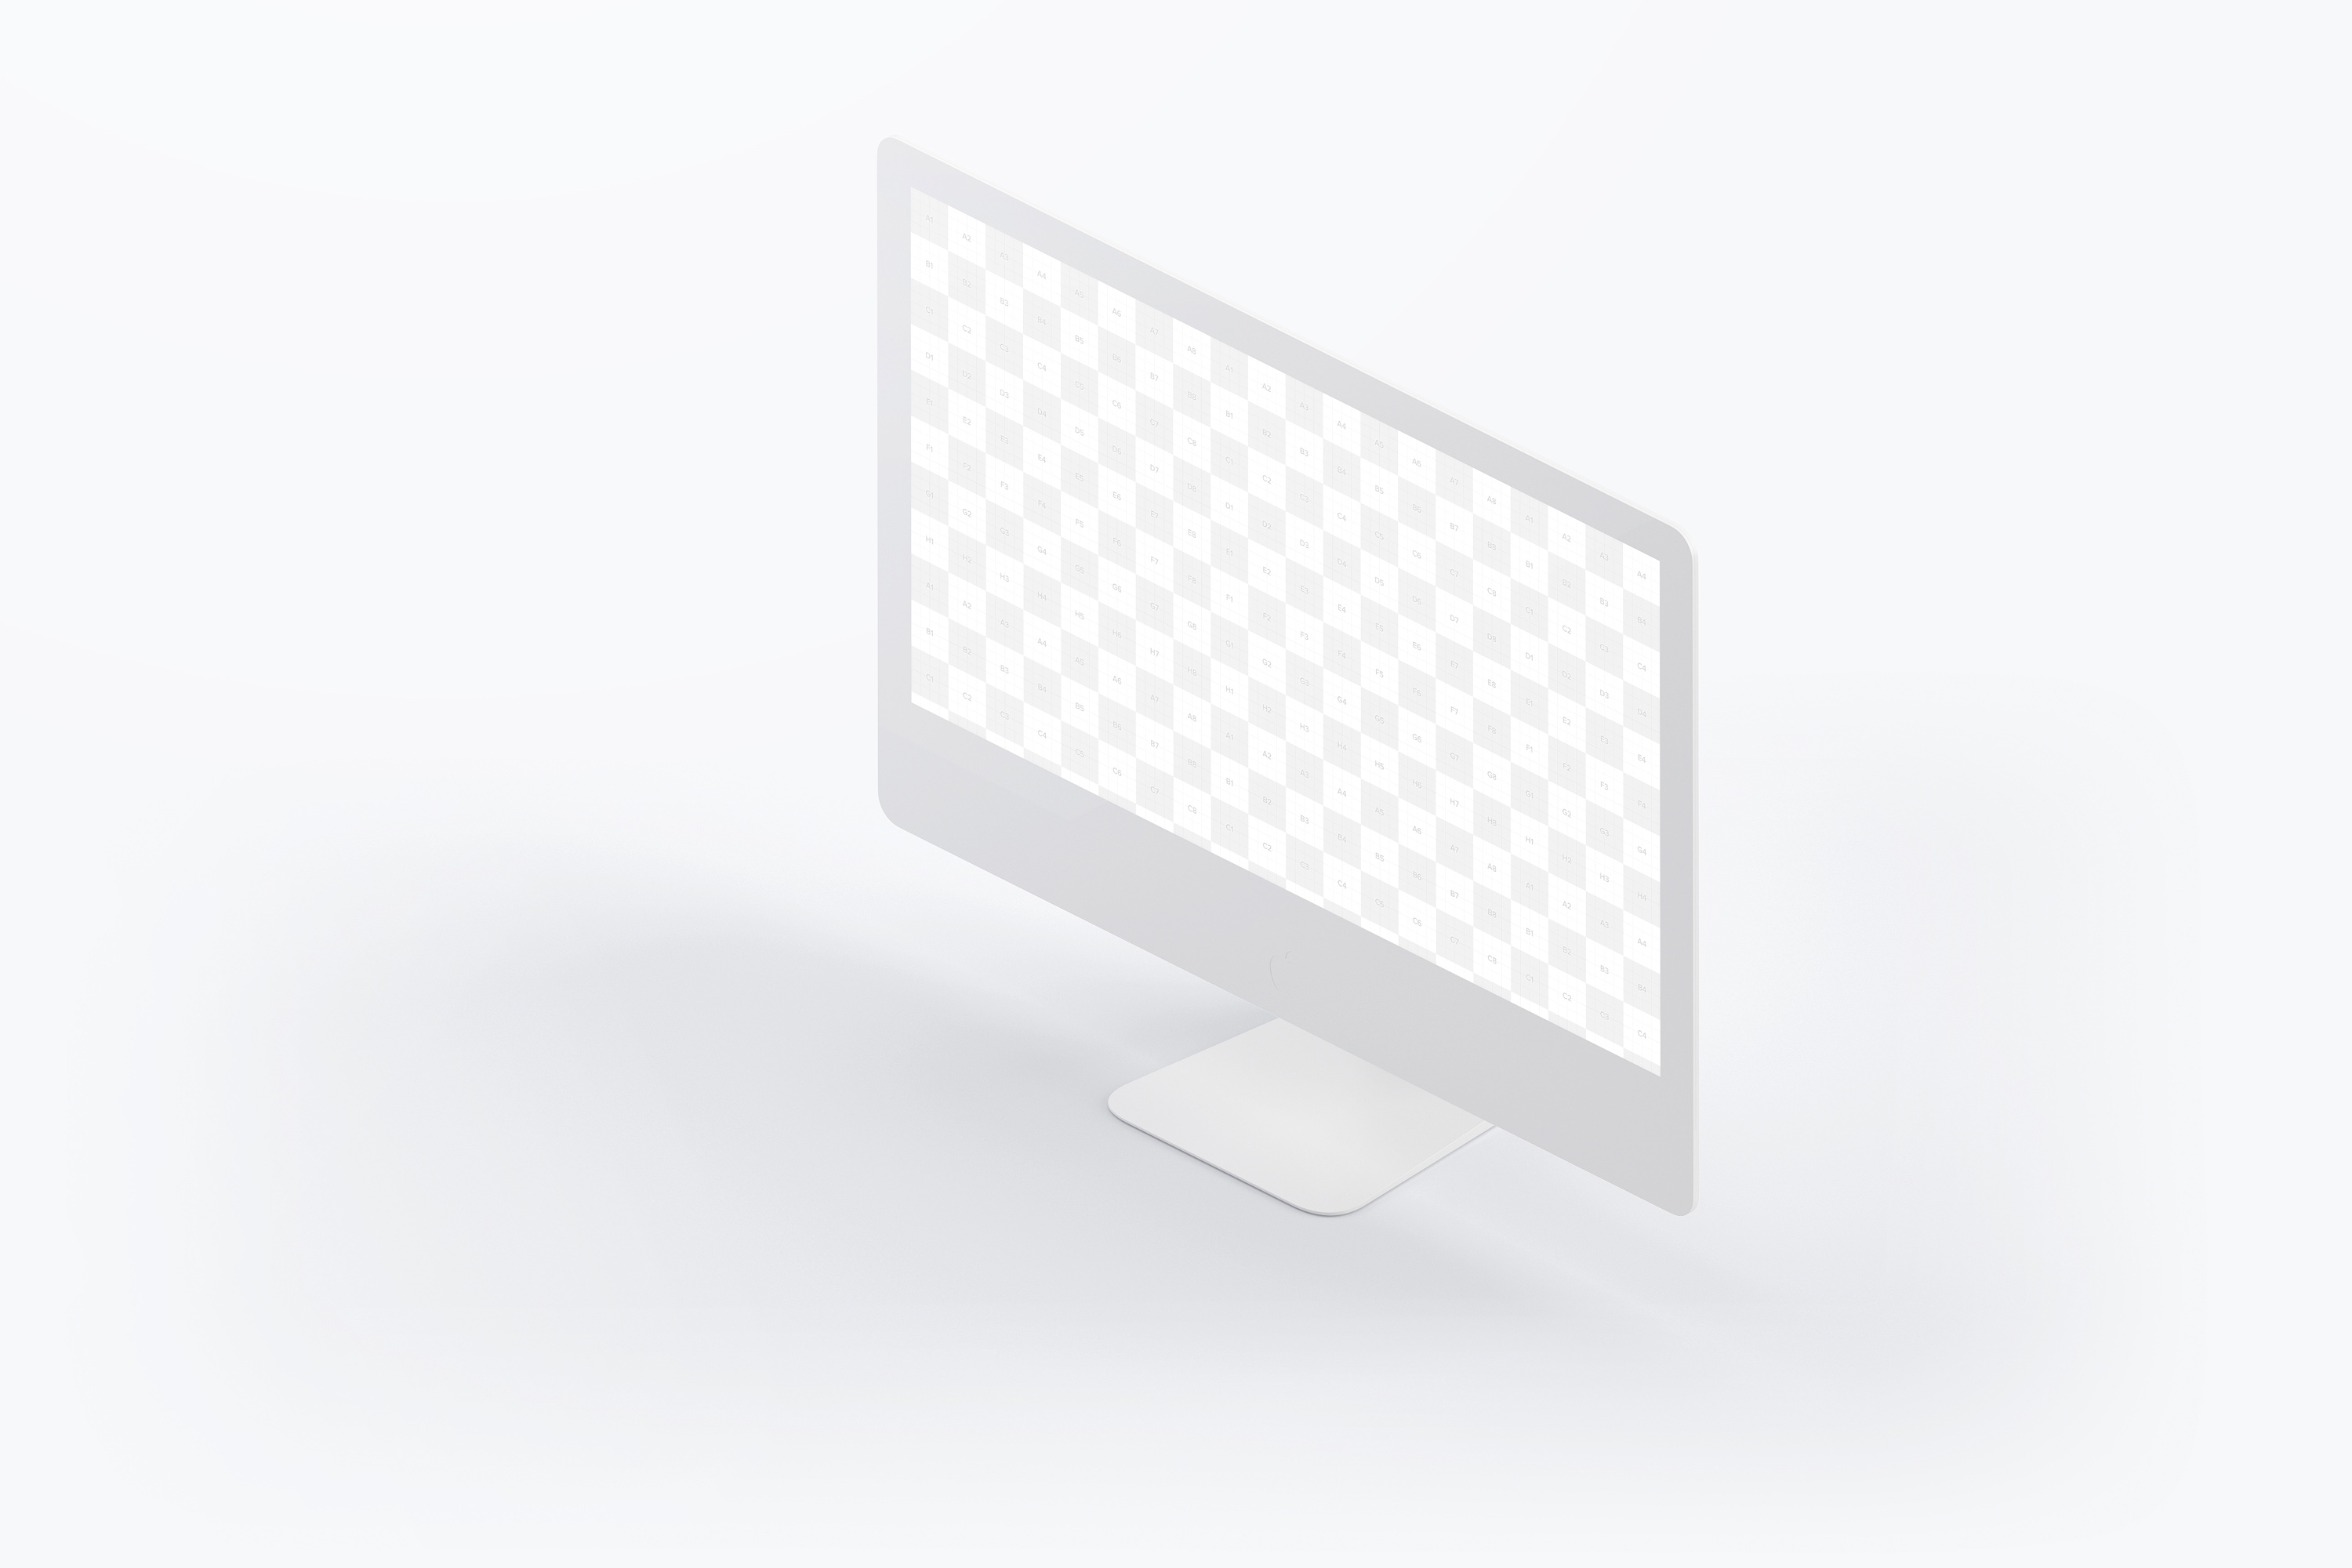 27寸iMac一体机Web界面设计效果图预览右视图样机 Clay iMac 27” Mockup, Isometric Right View插图(1)